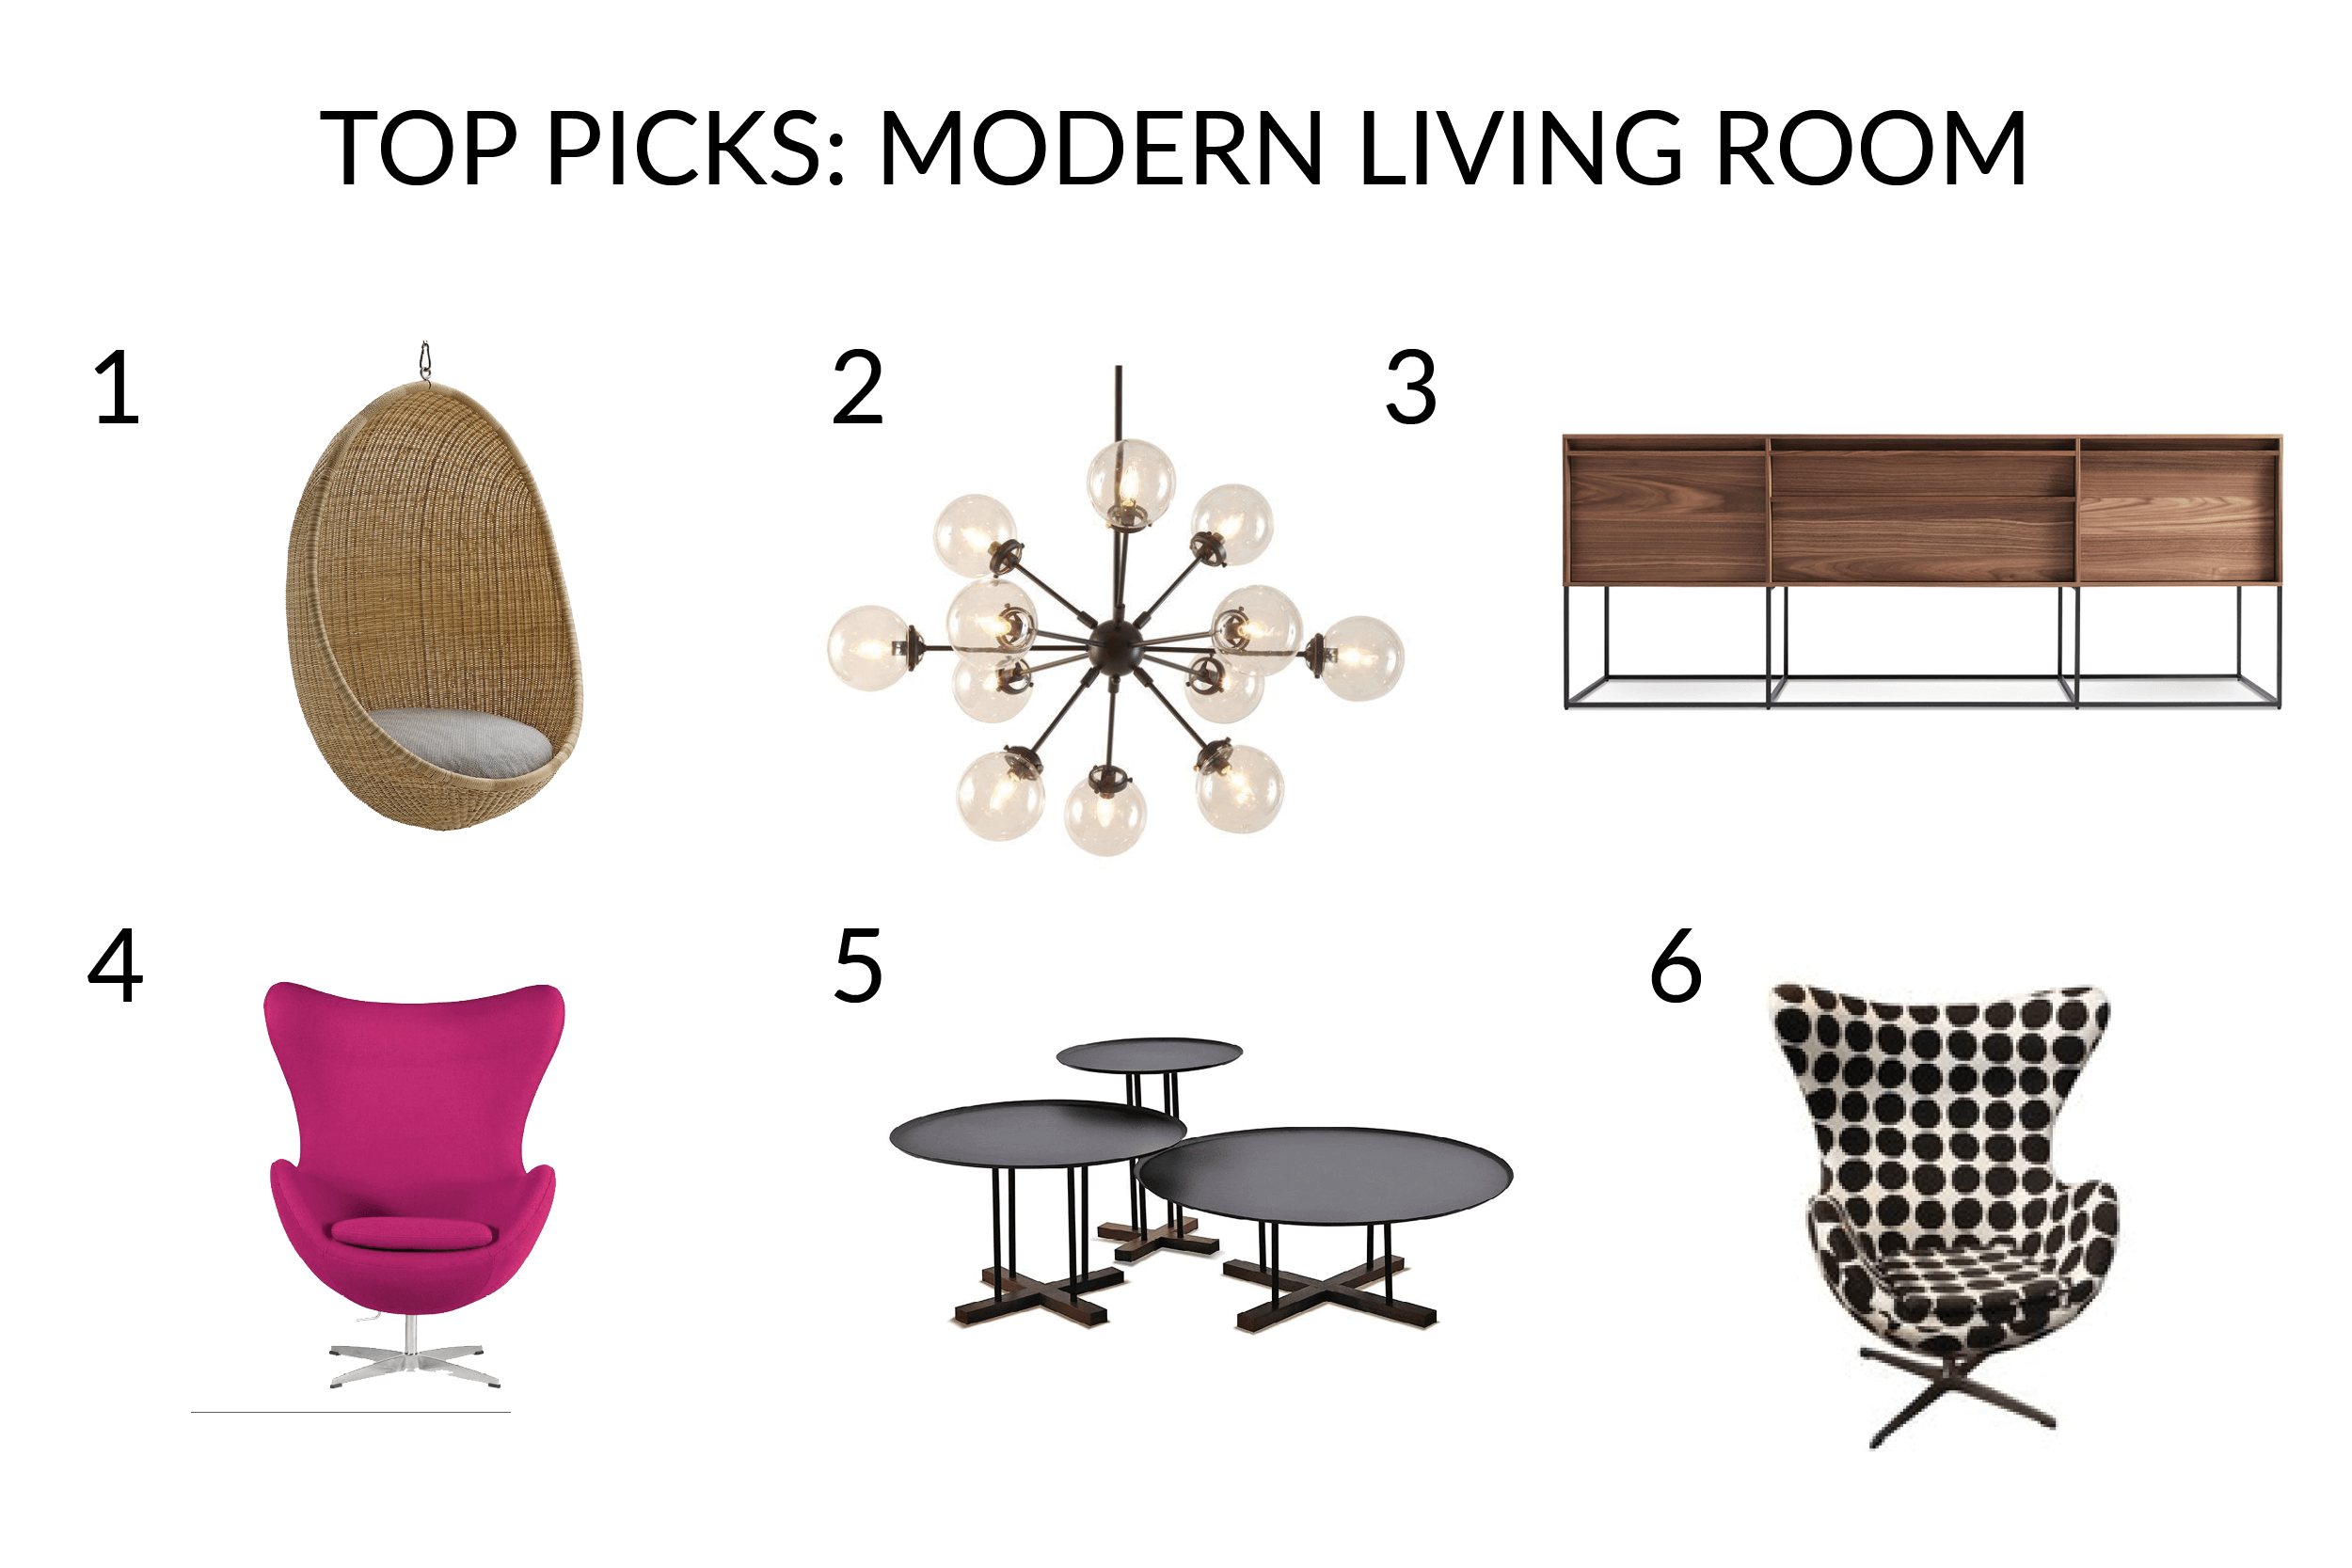 furniture for colorful modern living room interior design